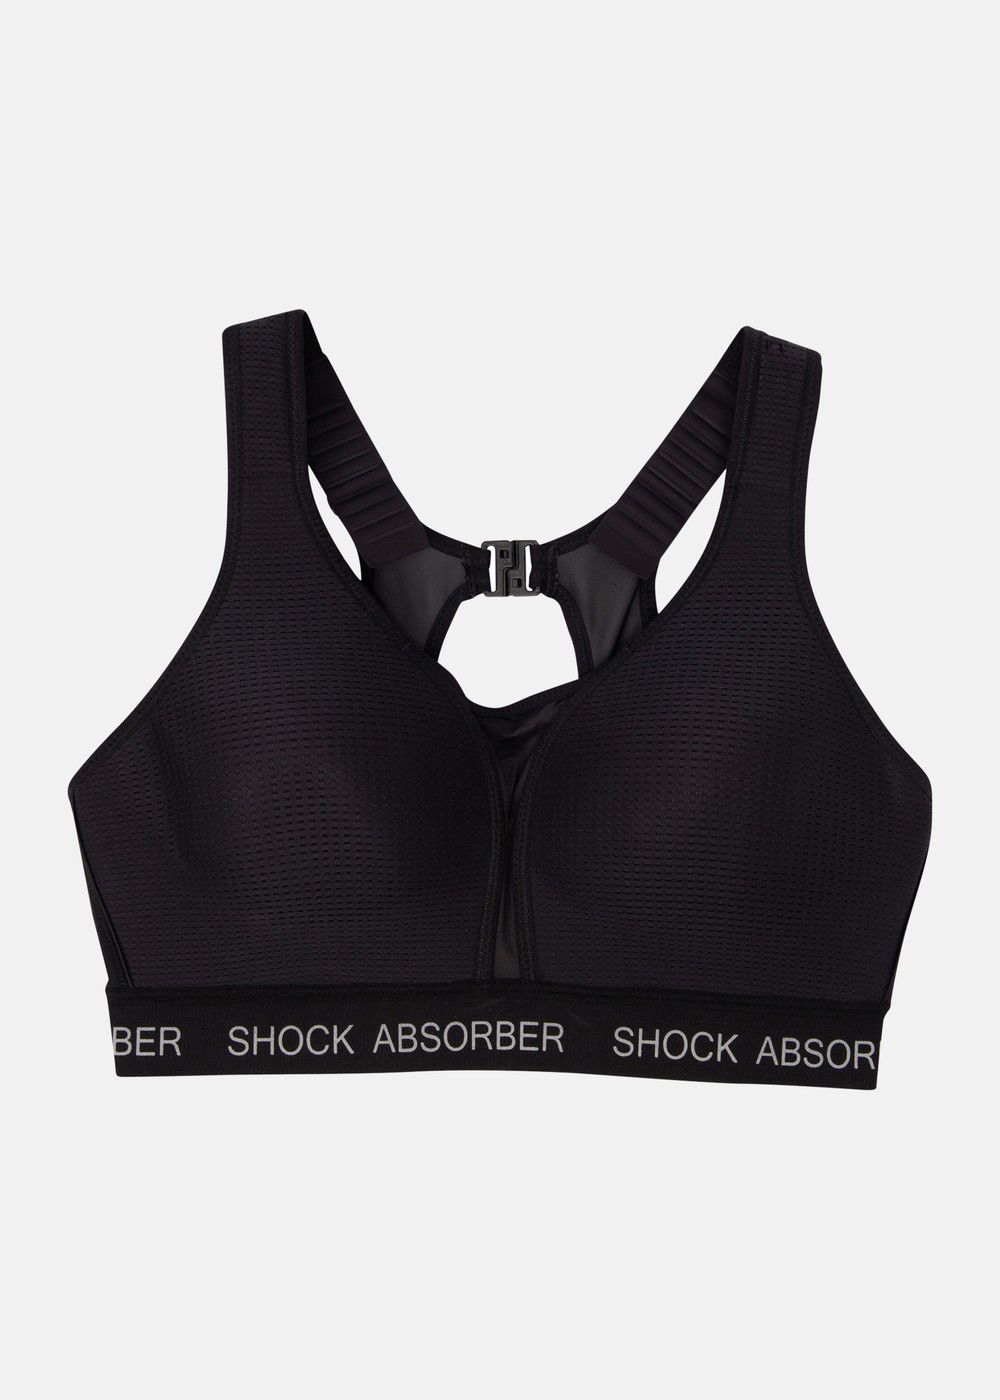 Shock Absorber Ultimate Run Bra Padded 06s7 - Sports bras